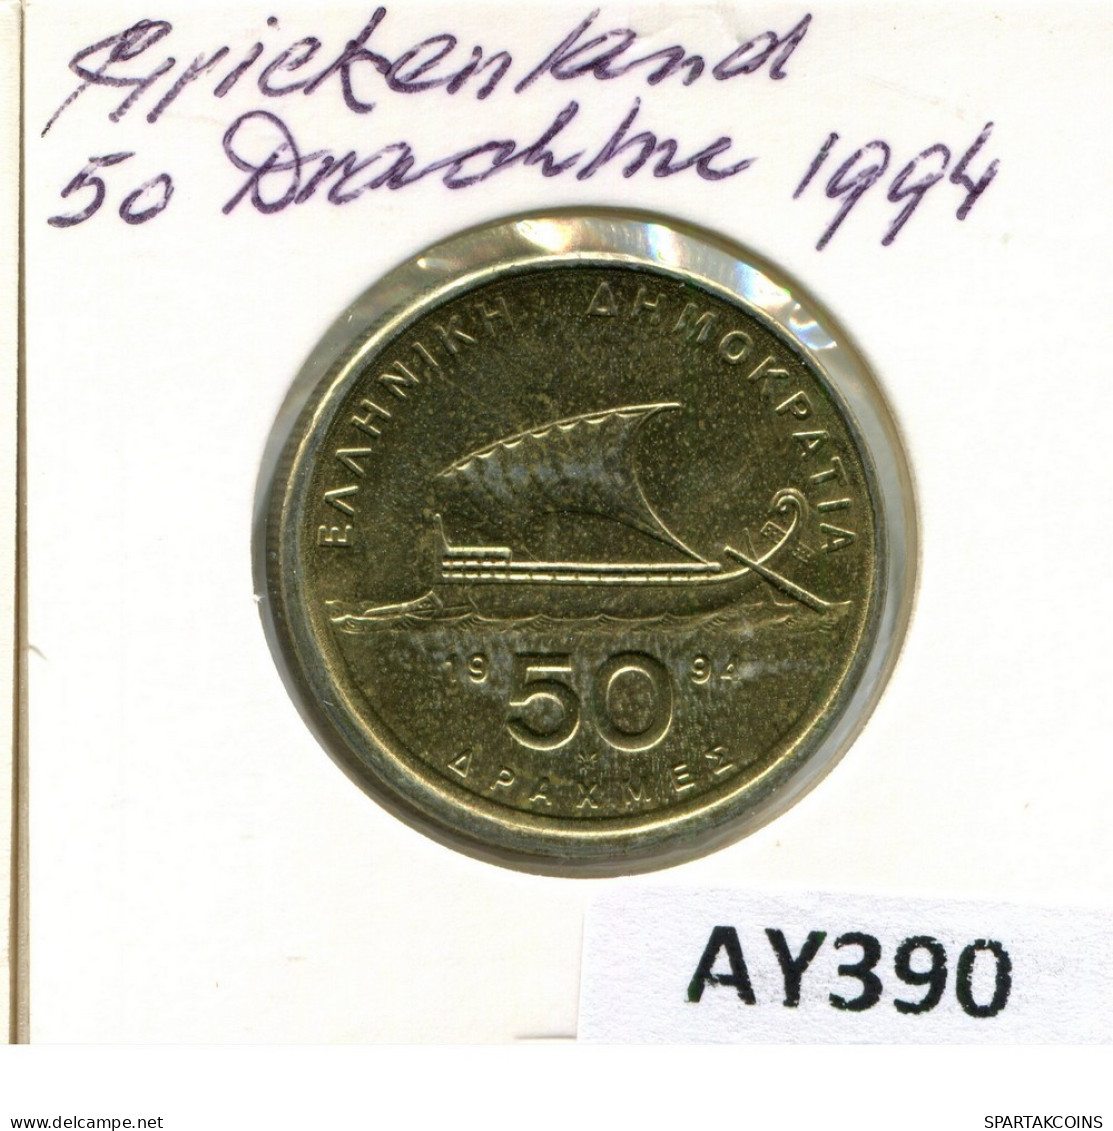 50 DRACHMES 1994 GRIECHENLAND GREECE Münze #AY390.D.A - Grecia